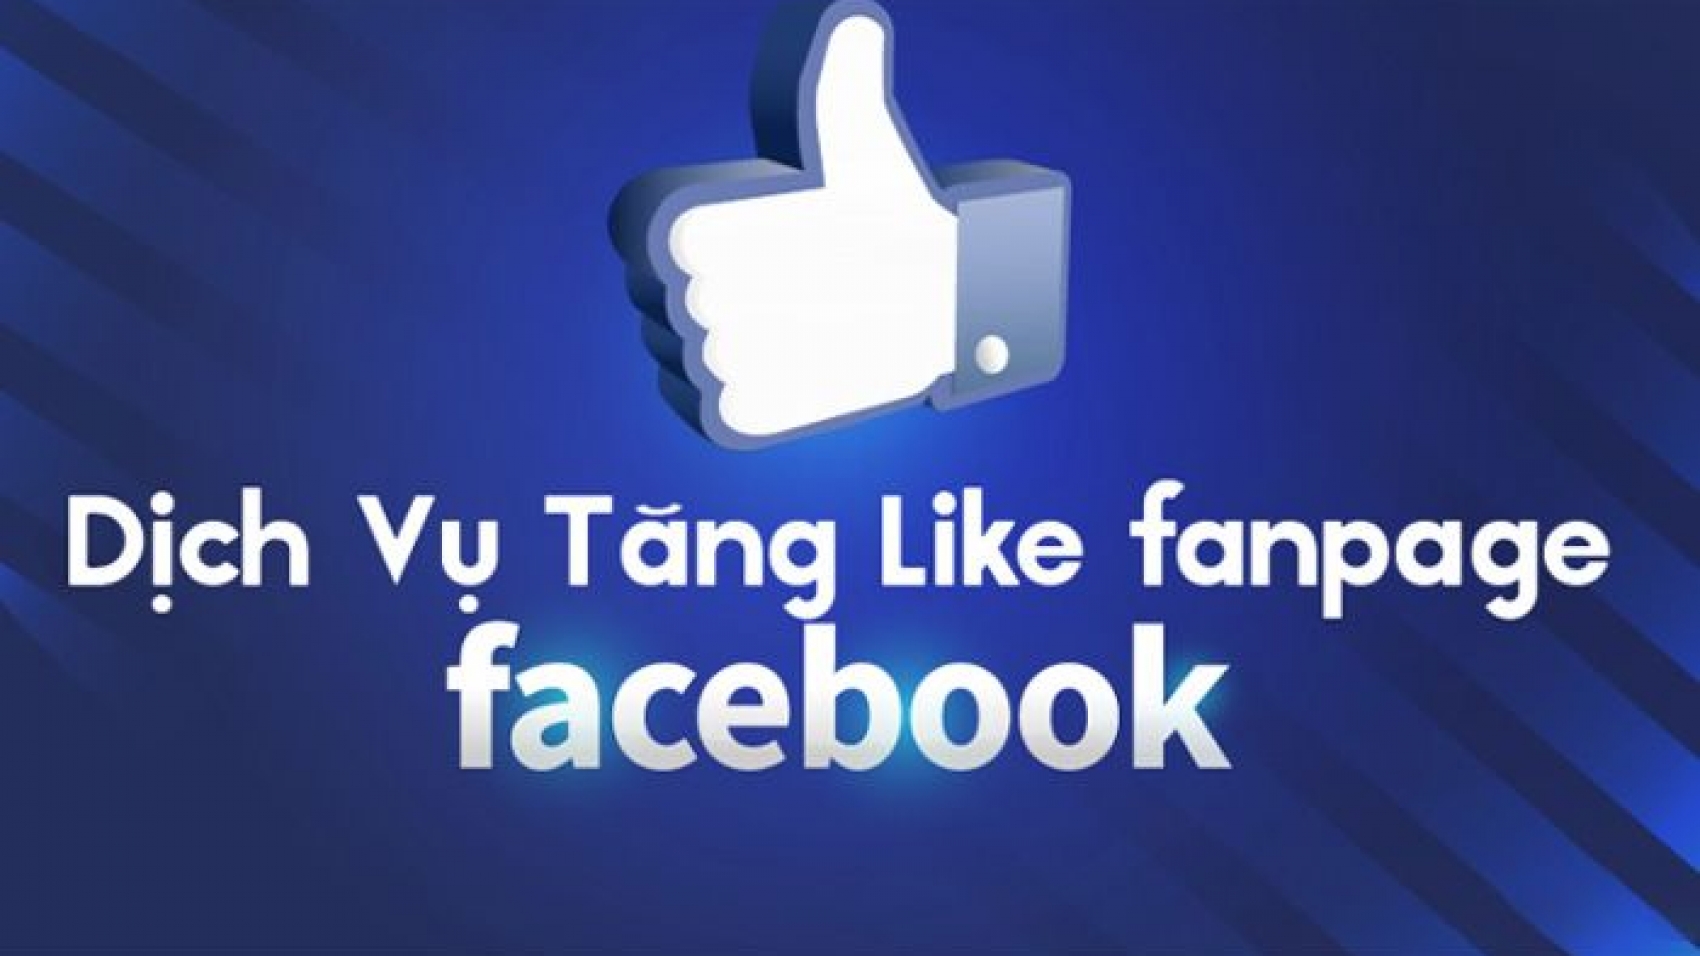 dich-vu-tang-like-fanpage-facebook-chat-luong-3-1700x956